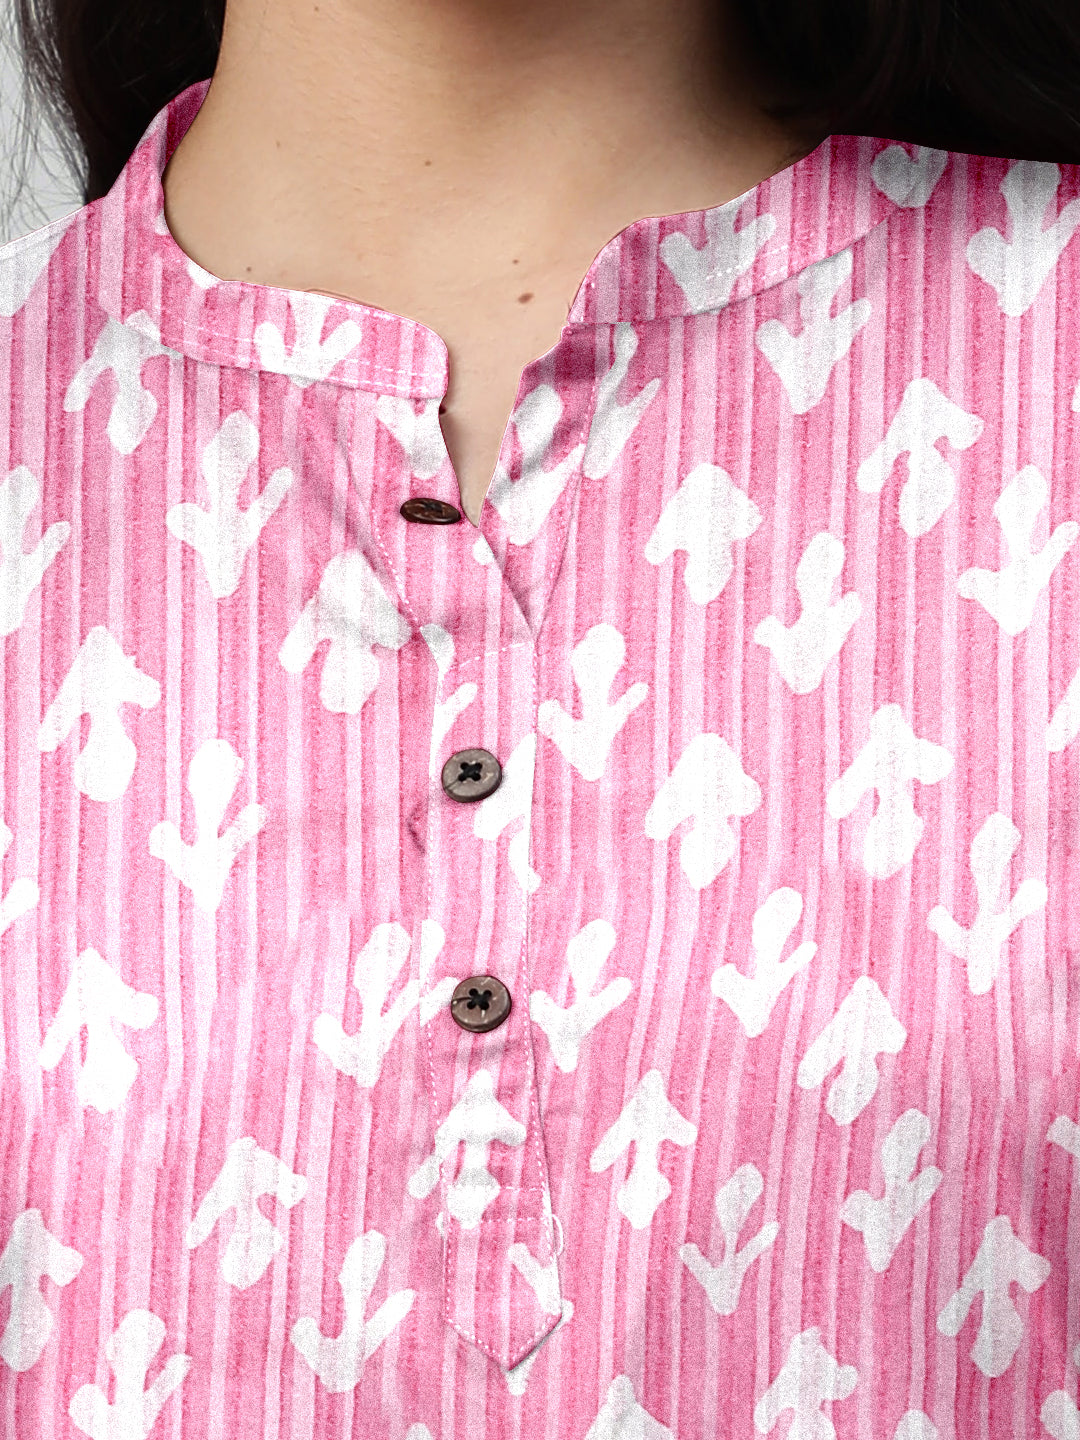 Pink printed woven tunic